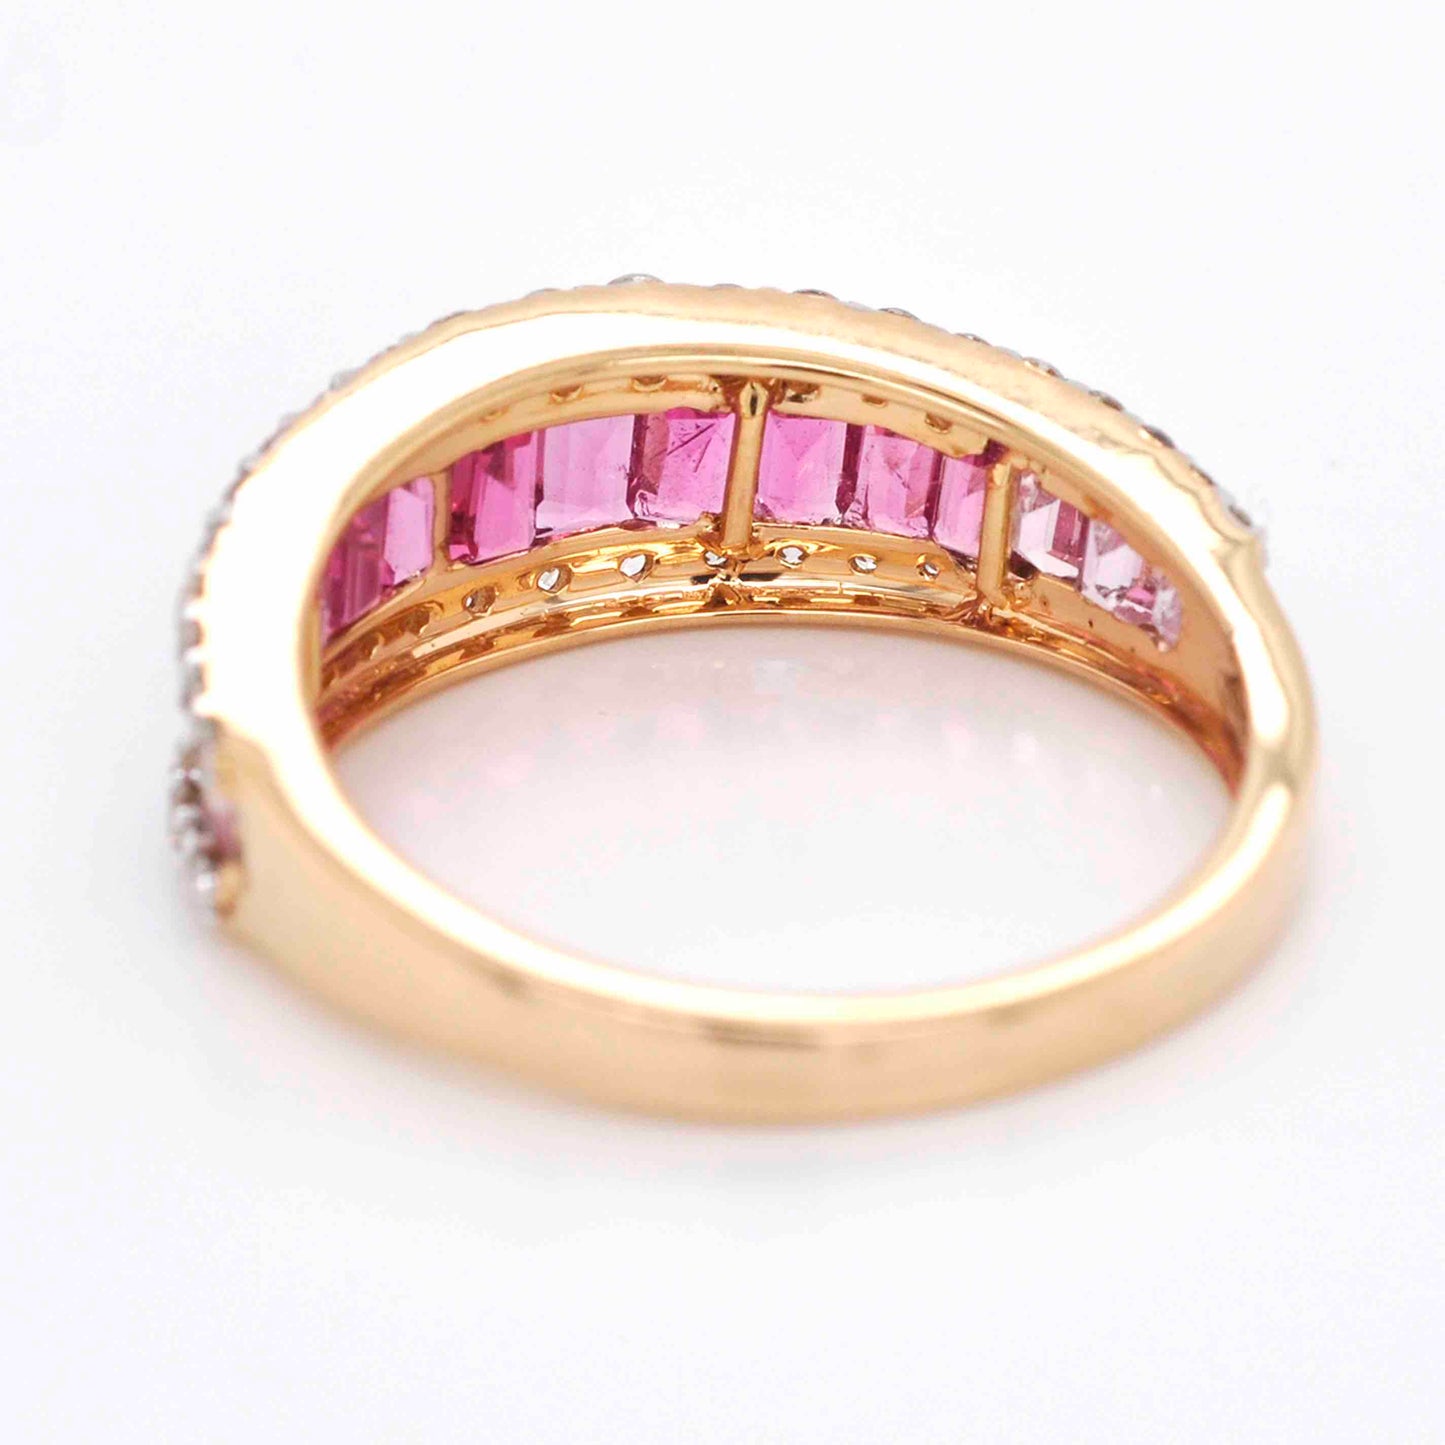 baguette diamond ring for everyday wear